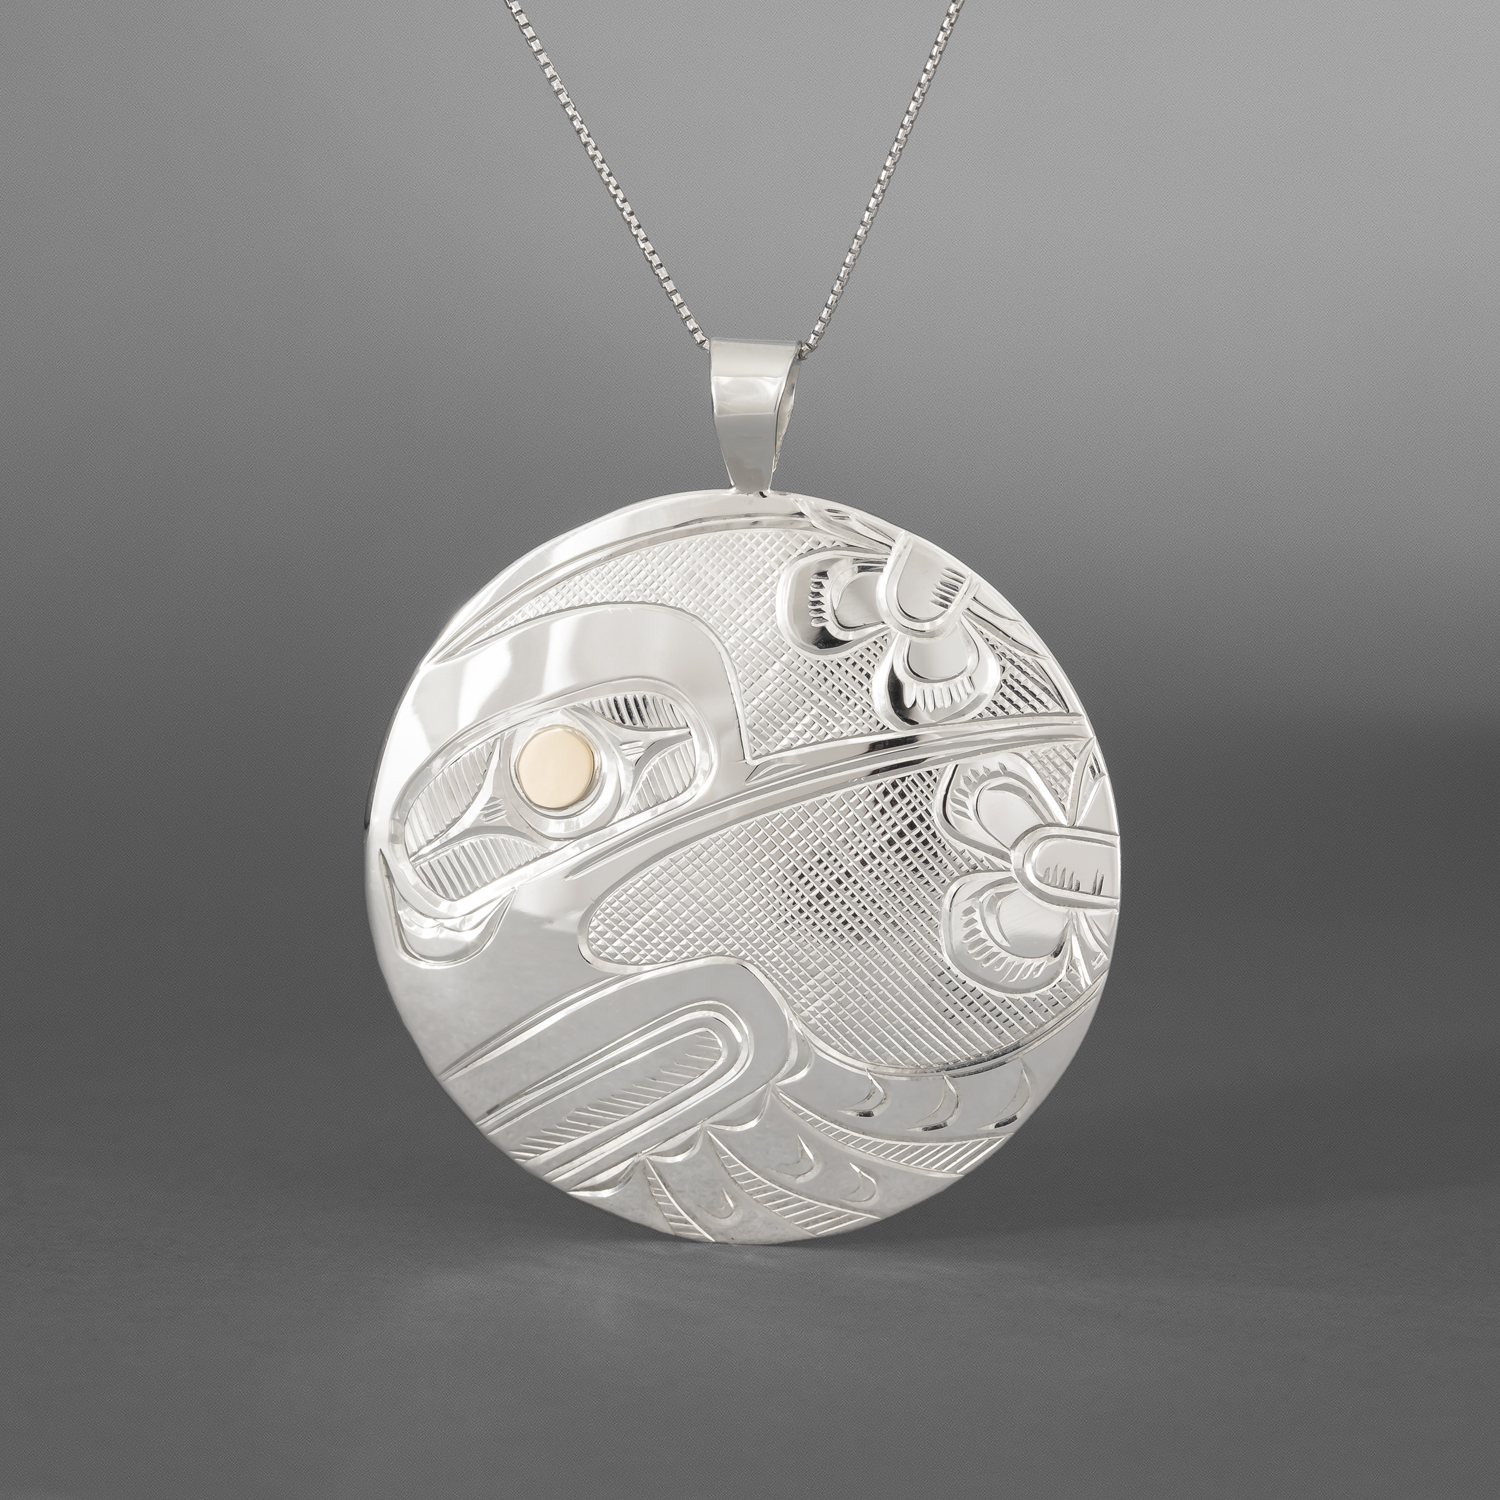 Hummingbird Pendant
Corrine Hunt
Kwakwaka'wakw/Tlingit
Sterling silver, 14k gold
2" dia.
$350